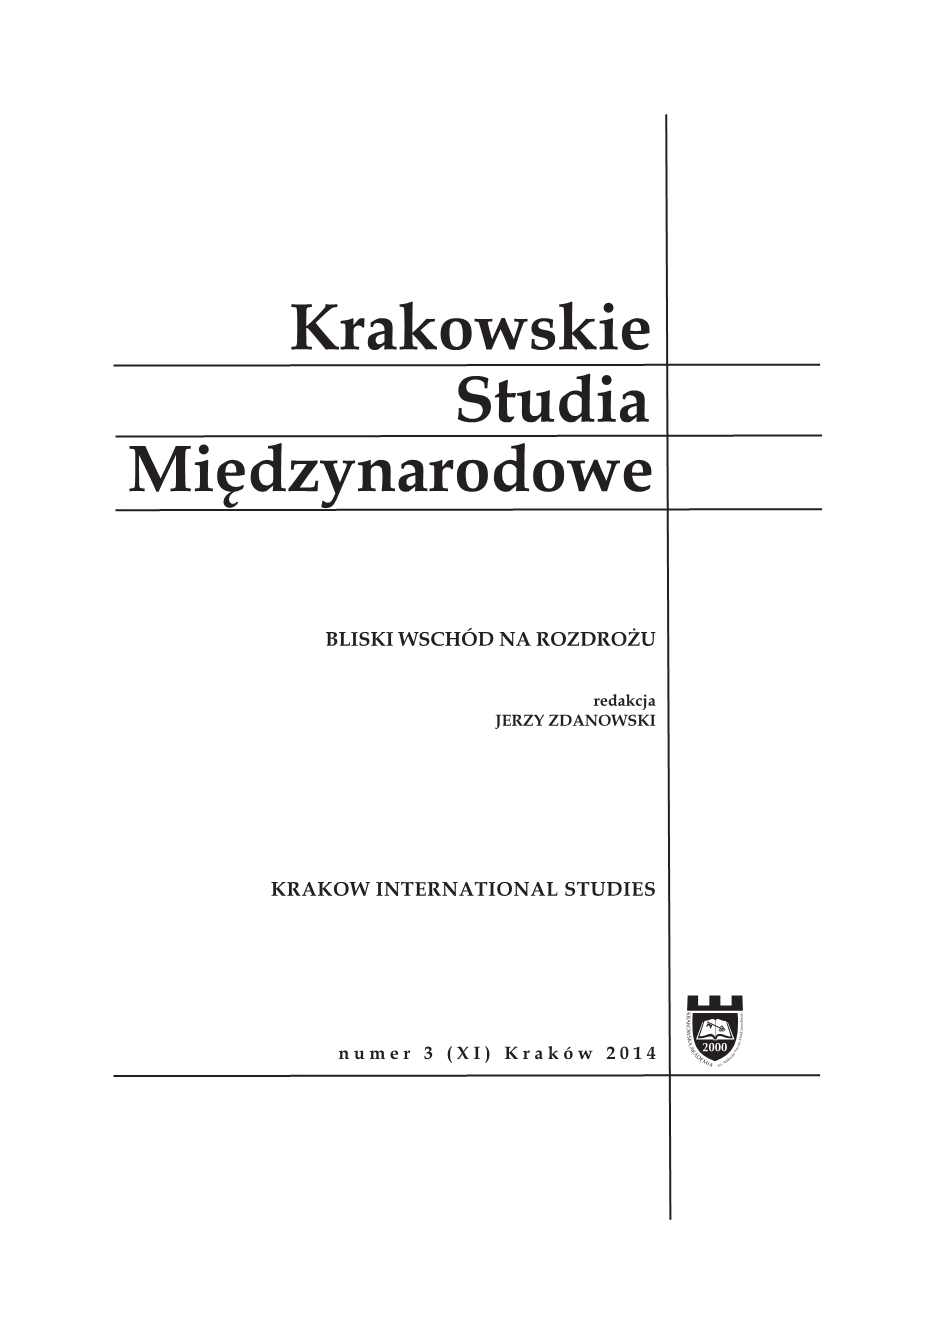 Anna Mrozek-Dumanowska, Religion and Globalization, [Wydawnictwo Naukowe Askon, Warsaw 2014, 292 pp.] Cover Image